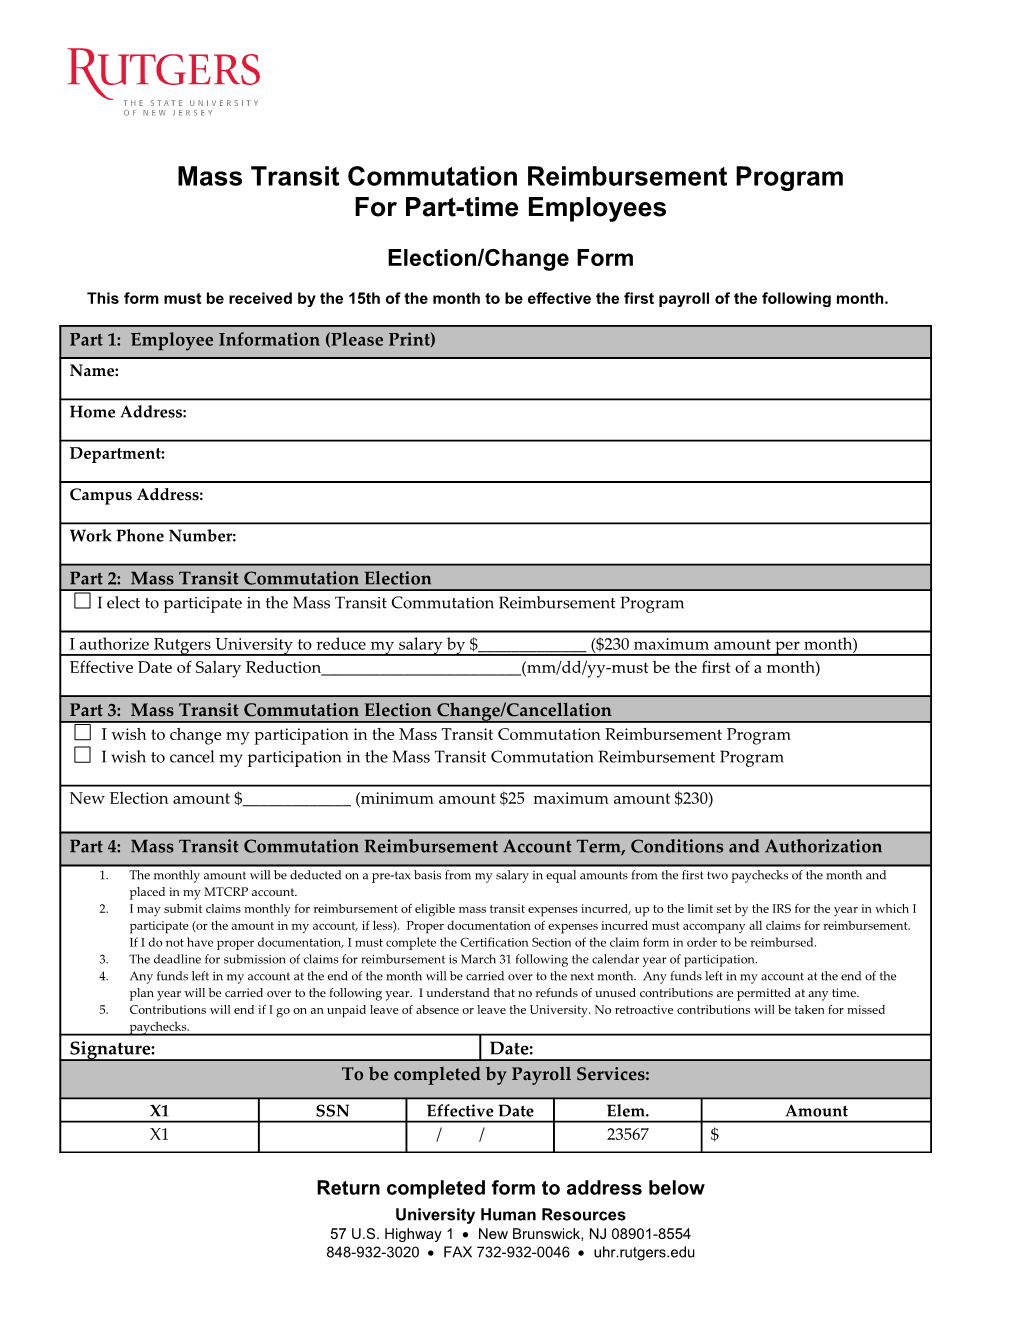 Mass Transit Commutation Reimbursement Program Election Form